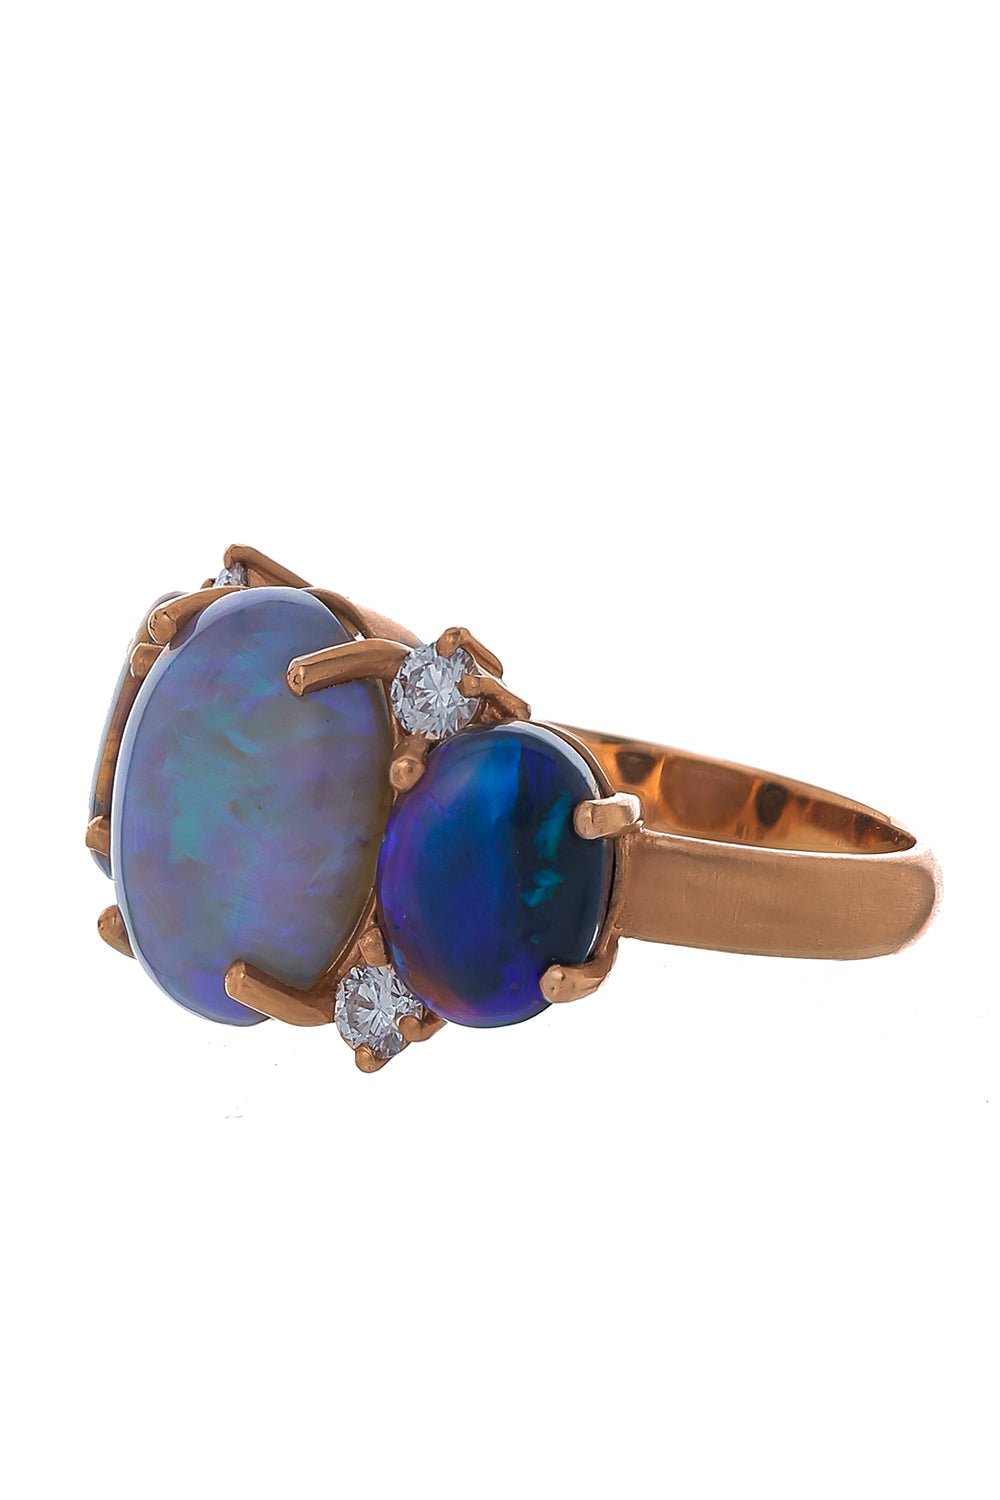 IRENE NEUWIRTH JEWELRY-Diamond Opal Ring-ROSE GOLD